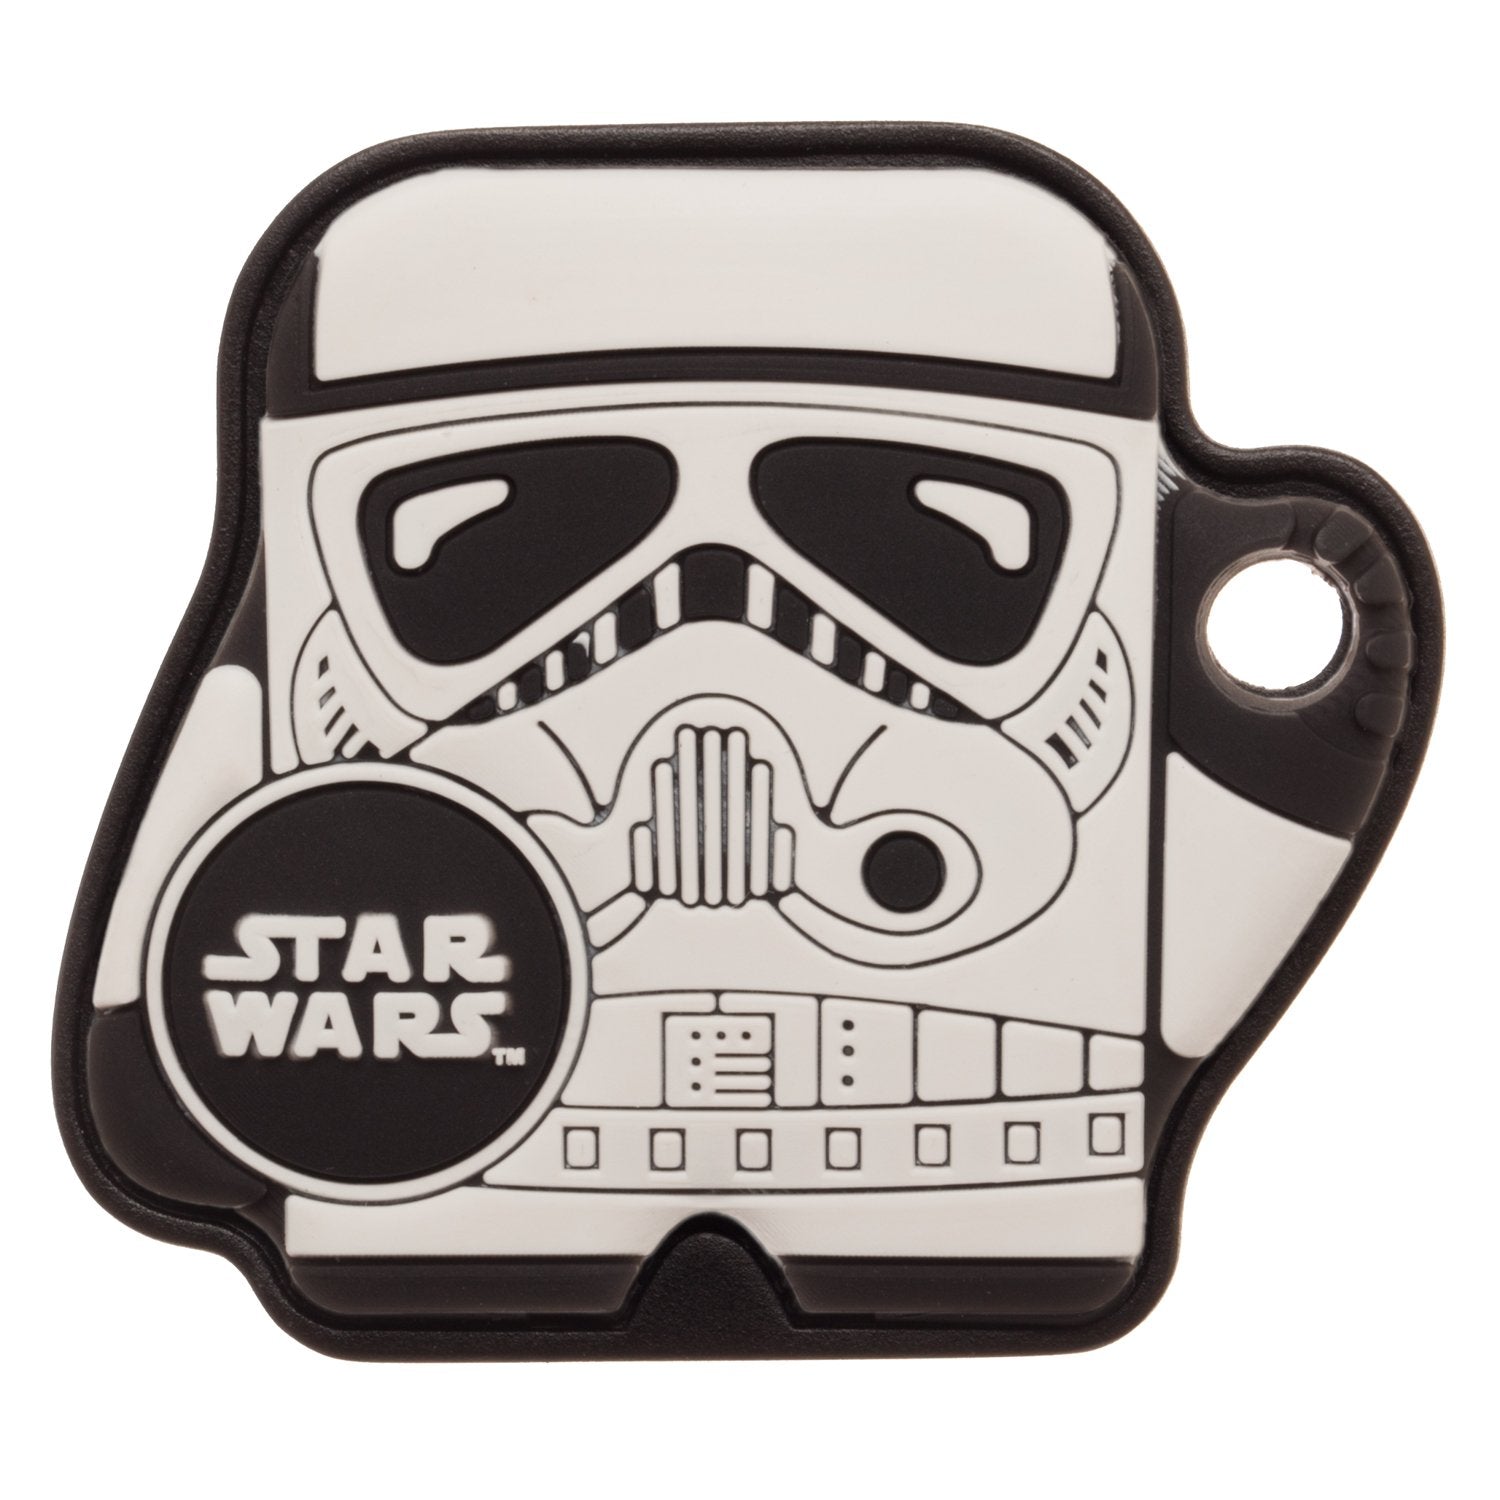 Star Wars foundmi 2.0 Personal Bluetooth Tracker, Storm Trooper